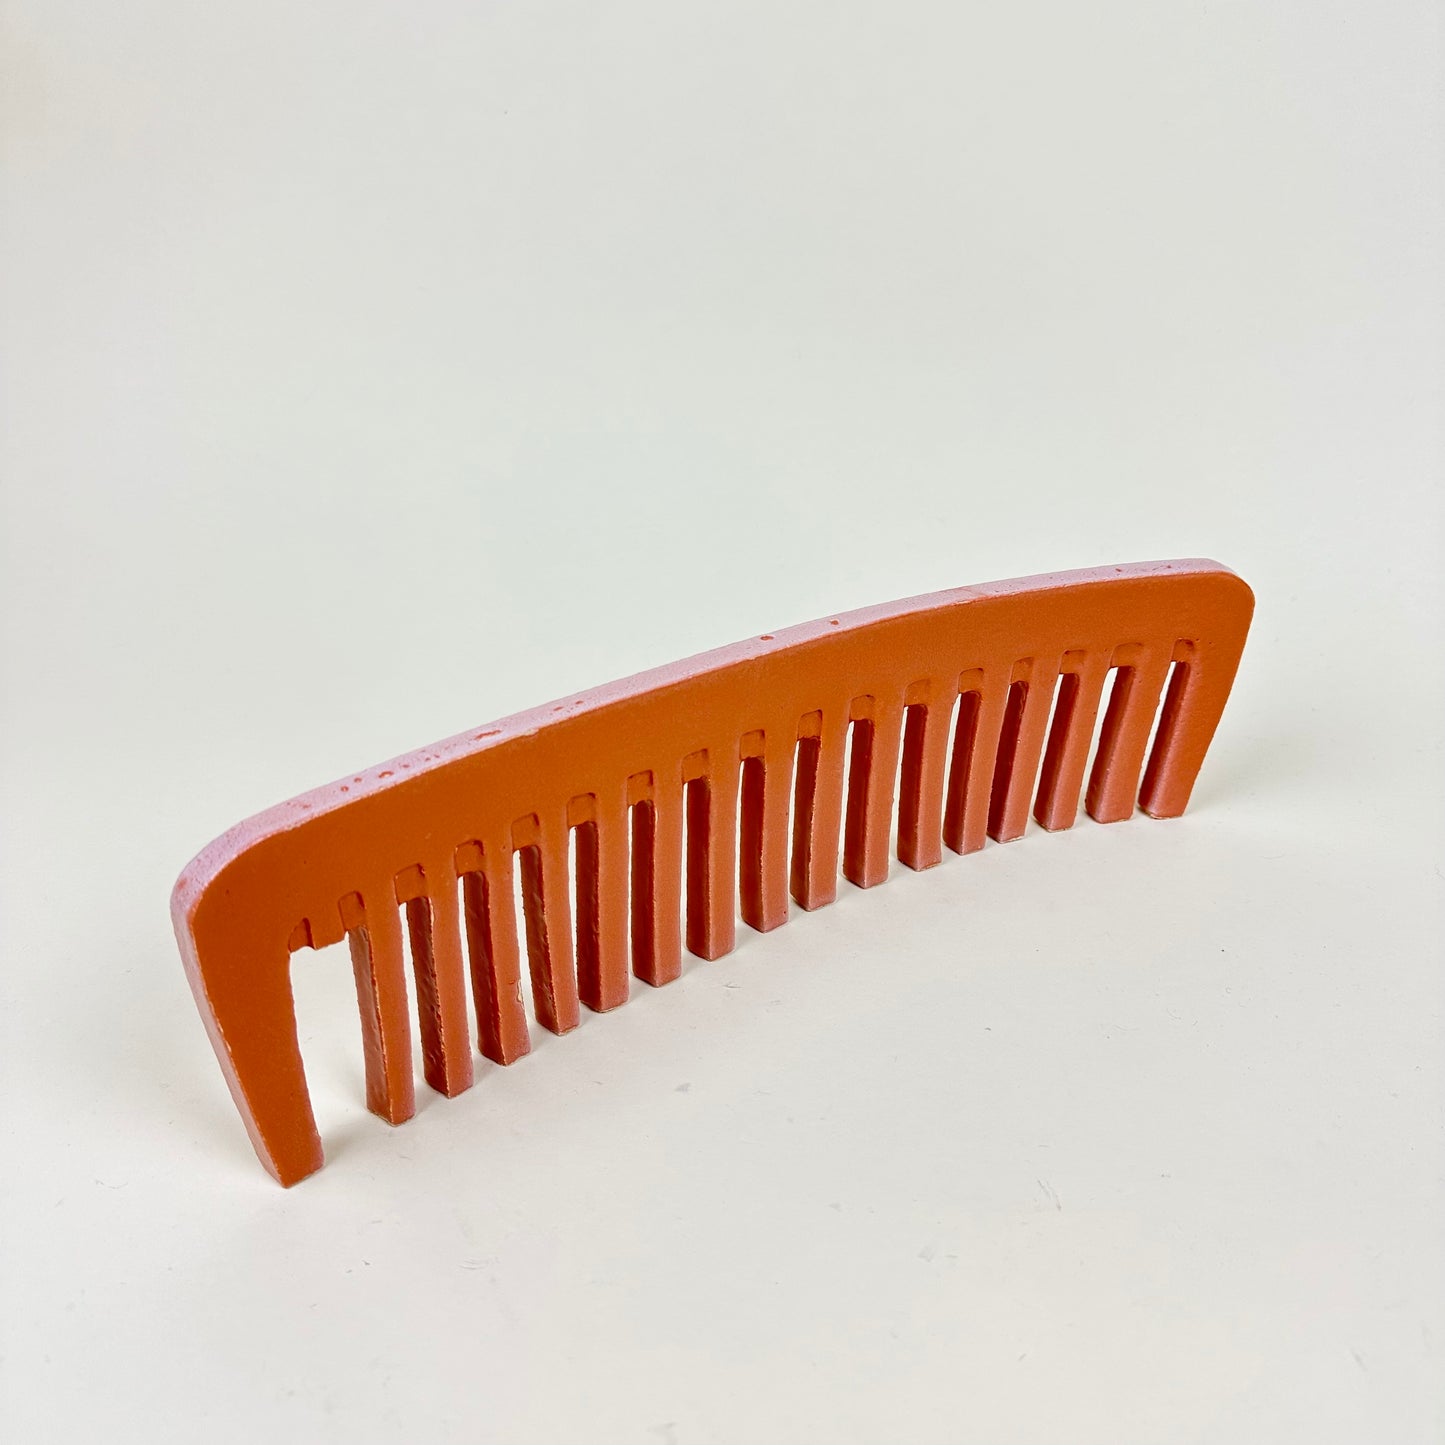 Ceramic comb by Evelina Björnqvist